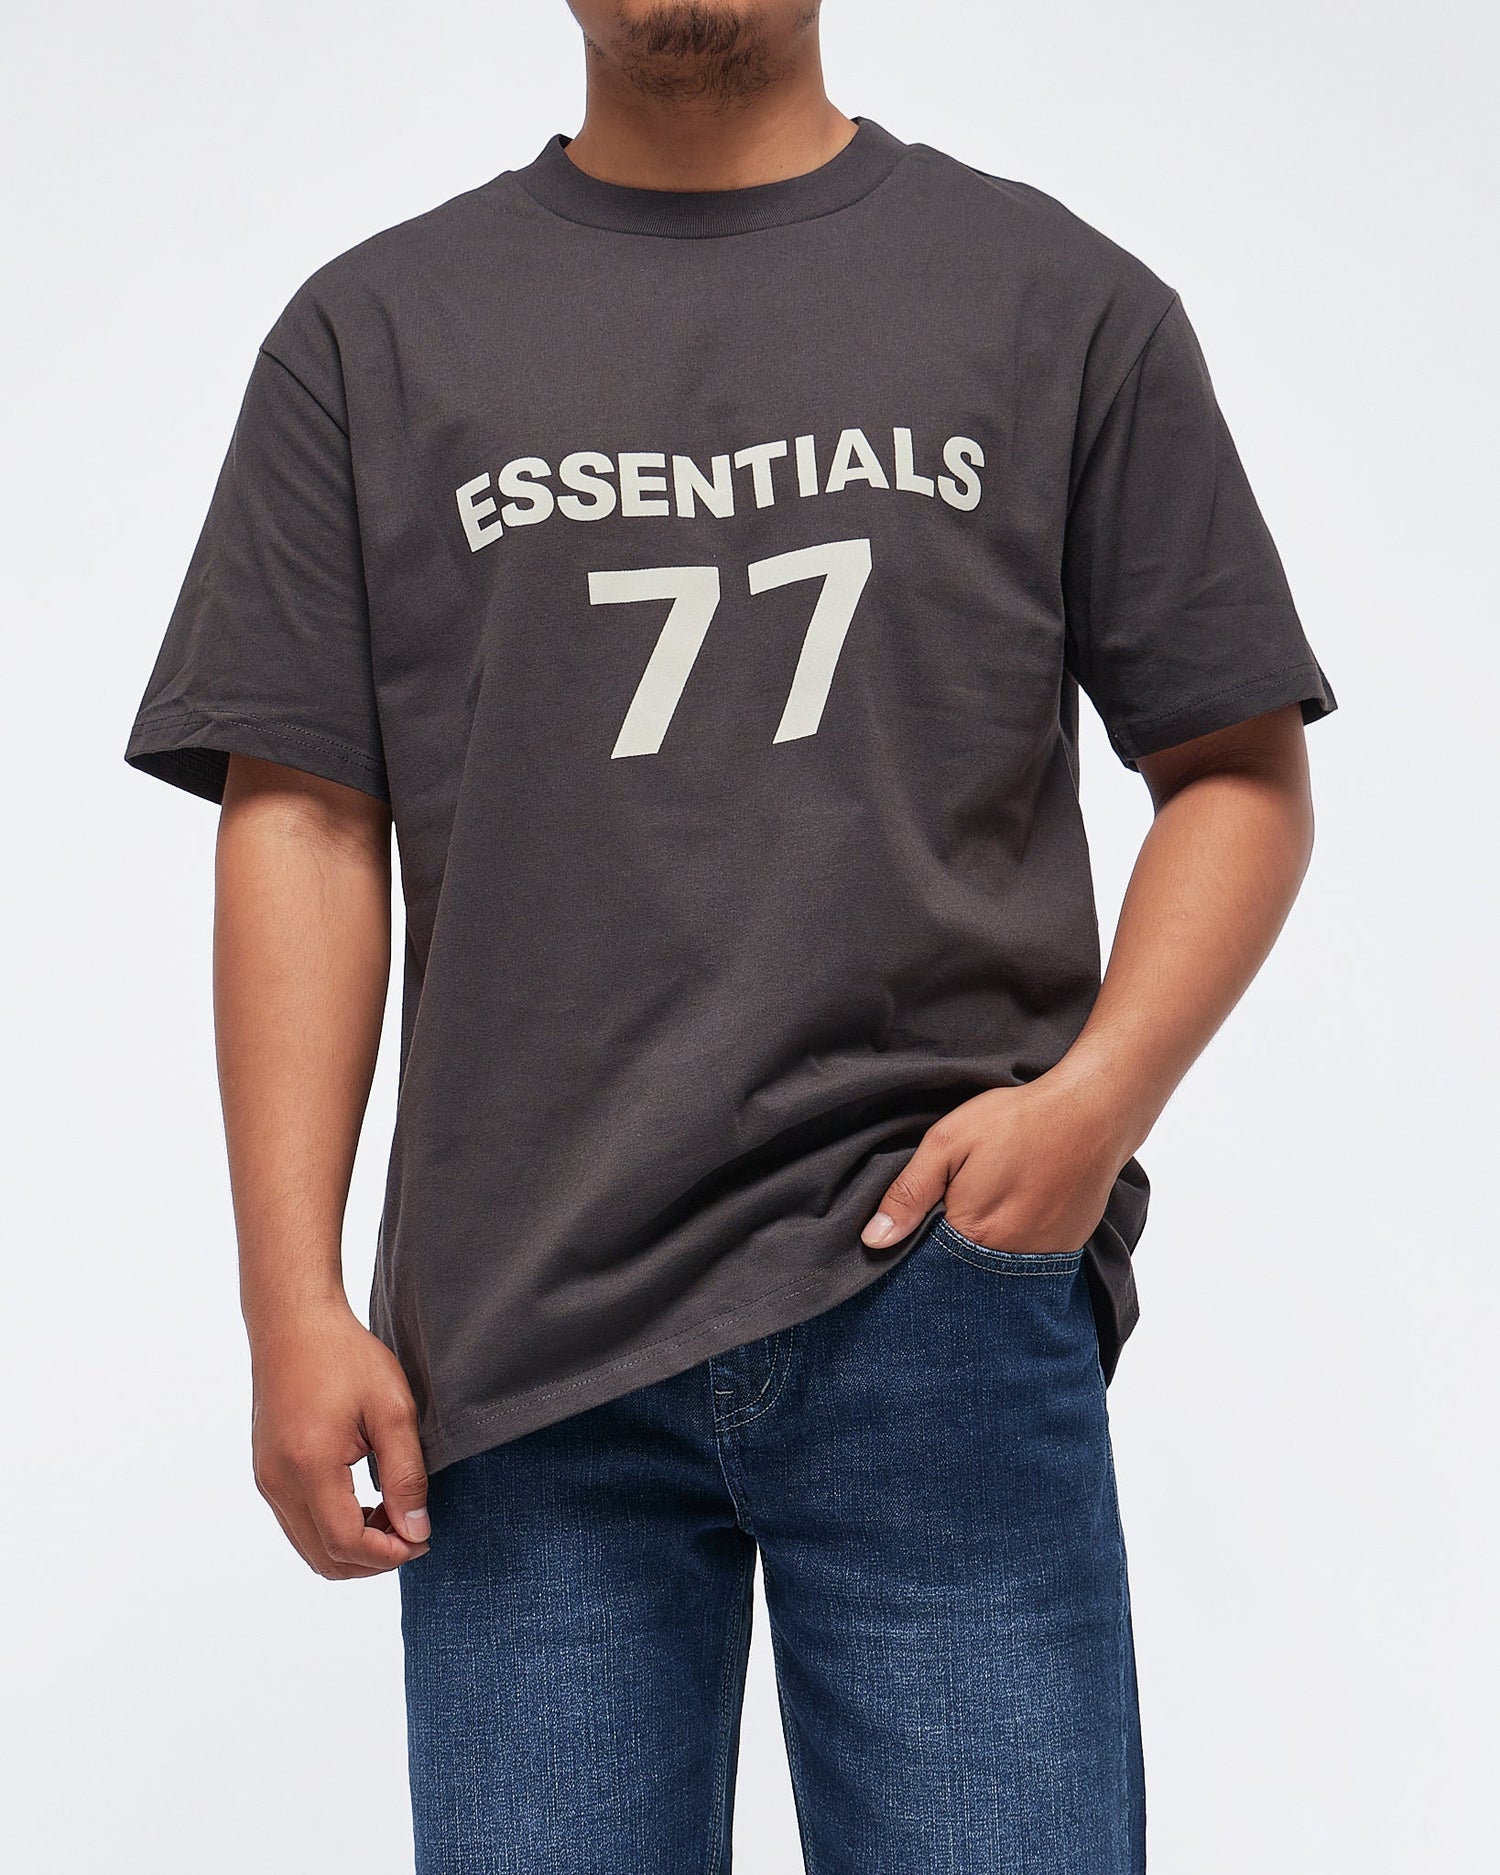 MOI OUTFIT-Essentials 77 Men T-Shirt 16.90